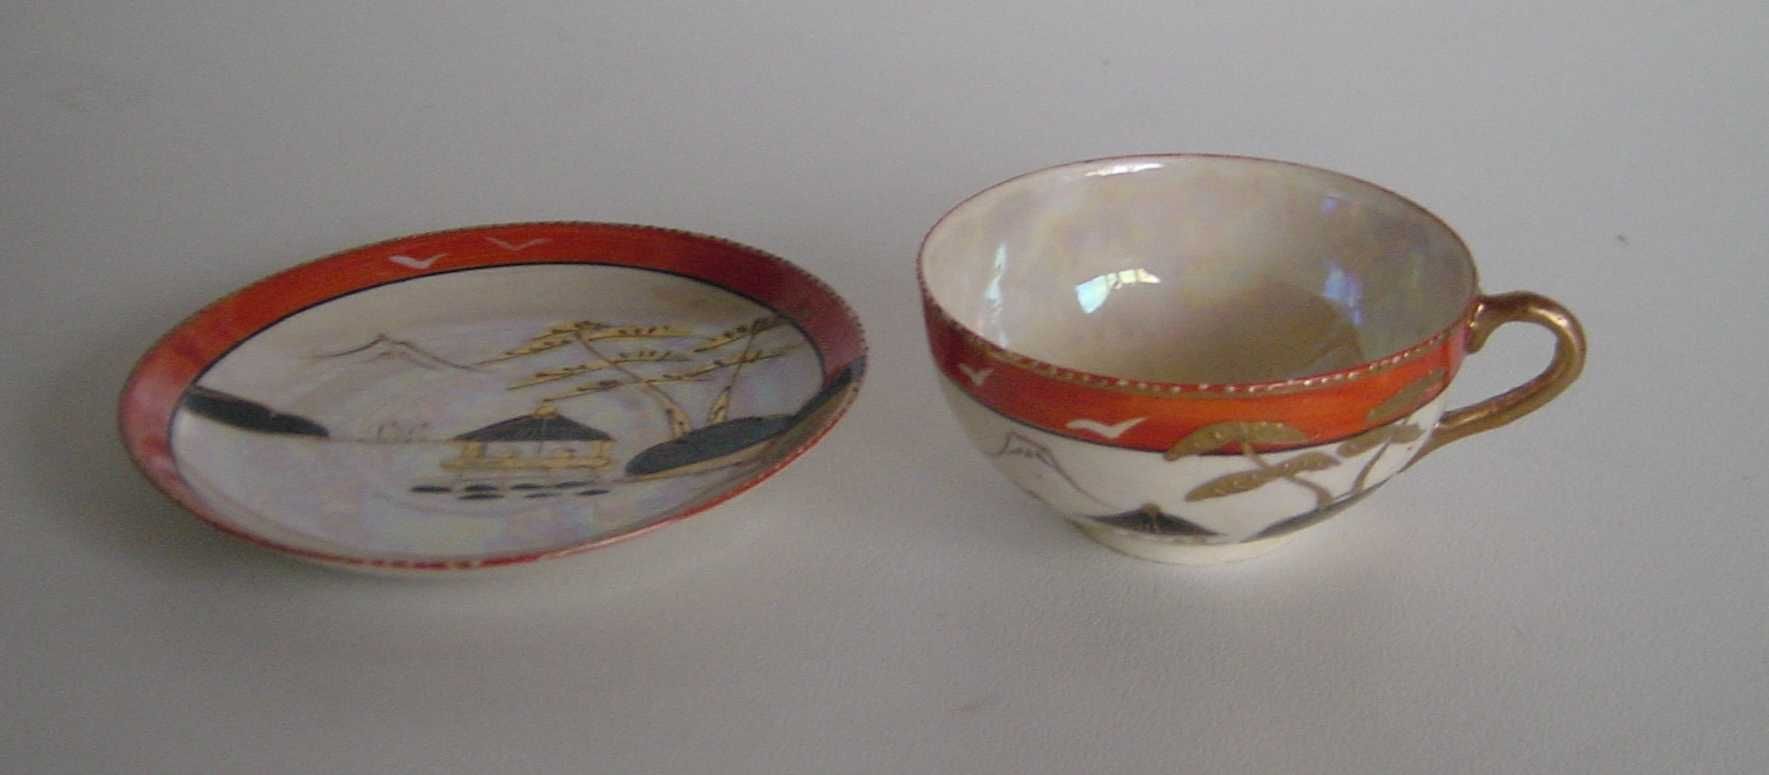 Chávena chá porcelana japonesa "casca ovo" pintada à mão - 1913/26